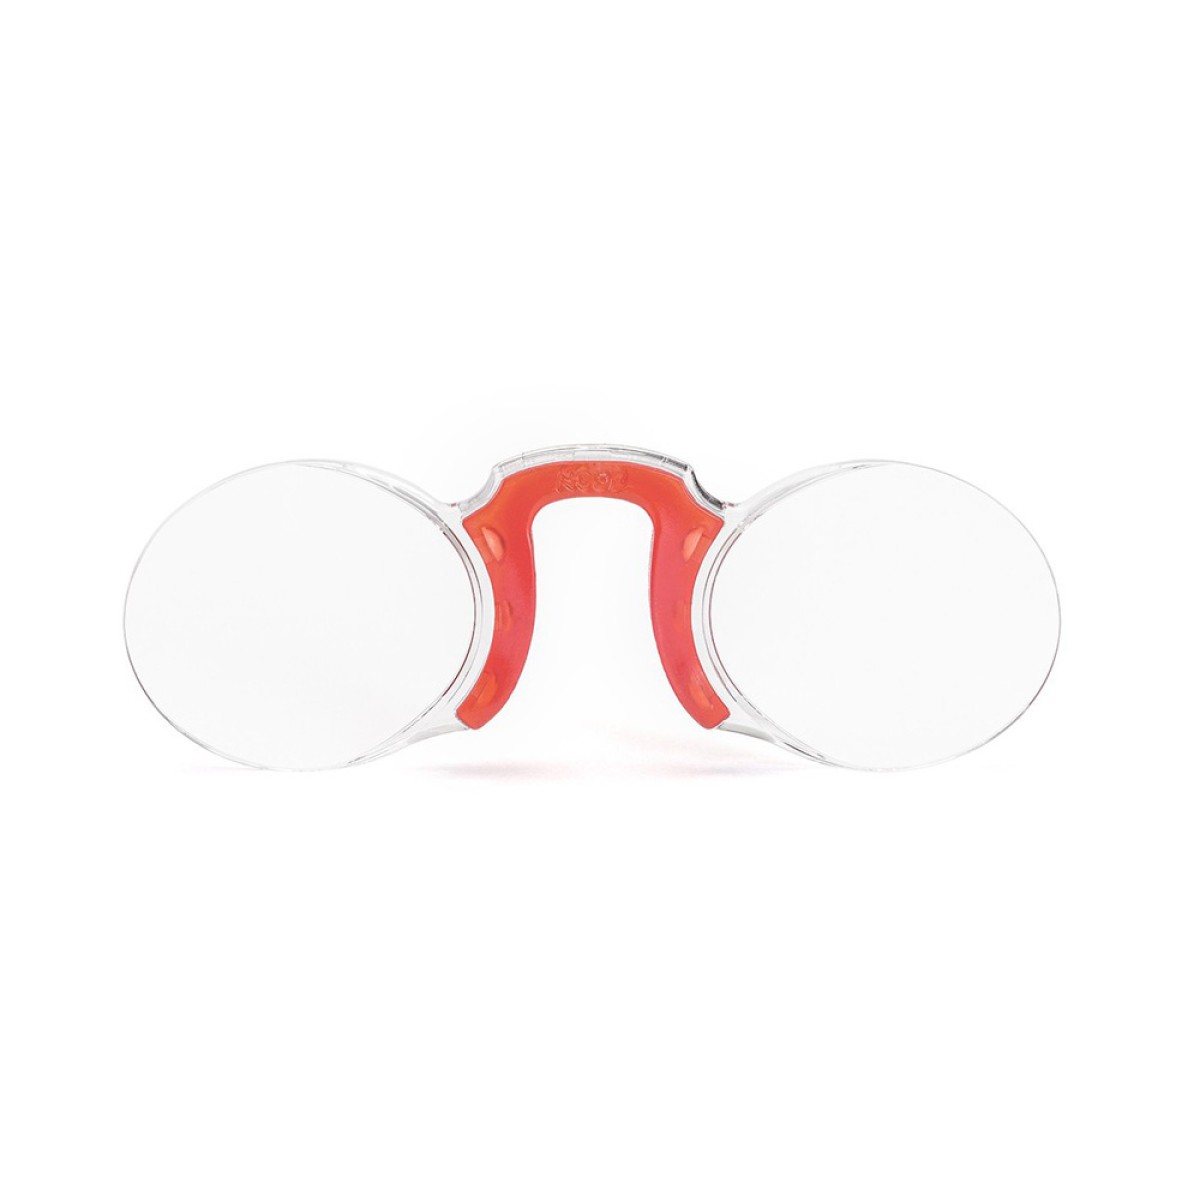 Nooz - Reading glasses - Oval - Tomato